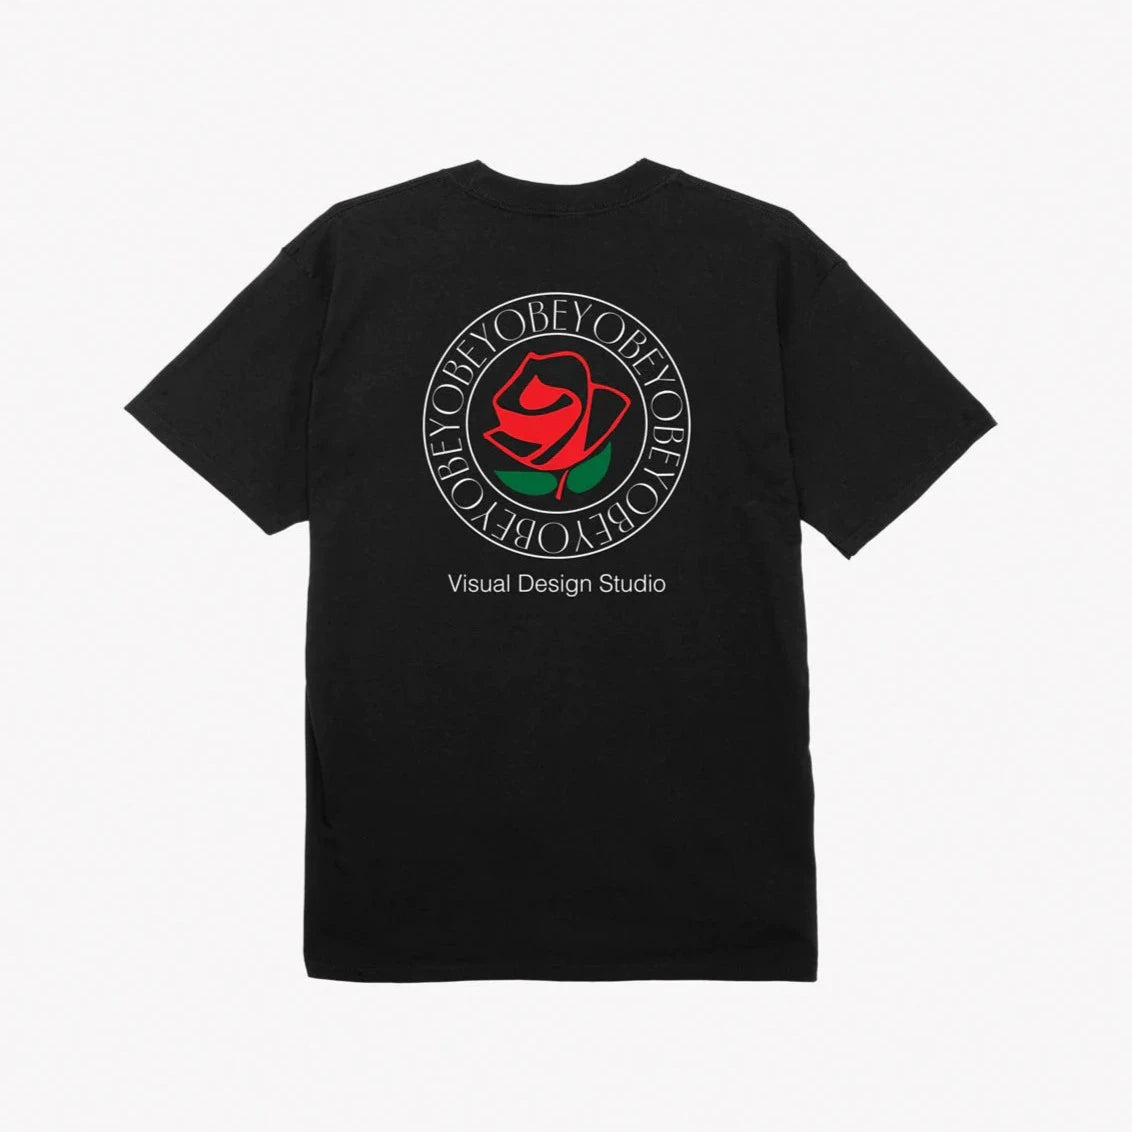 Obey Visual Design Studio T-Shirt - Black